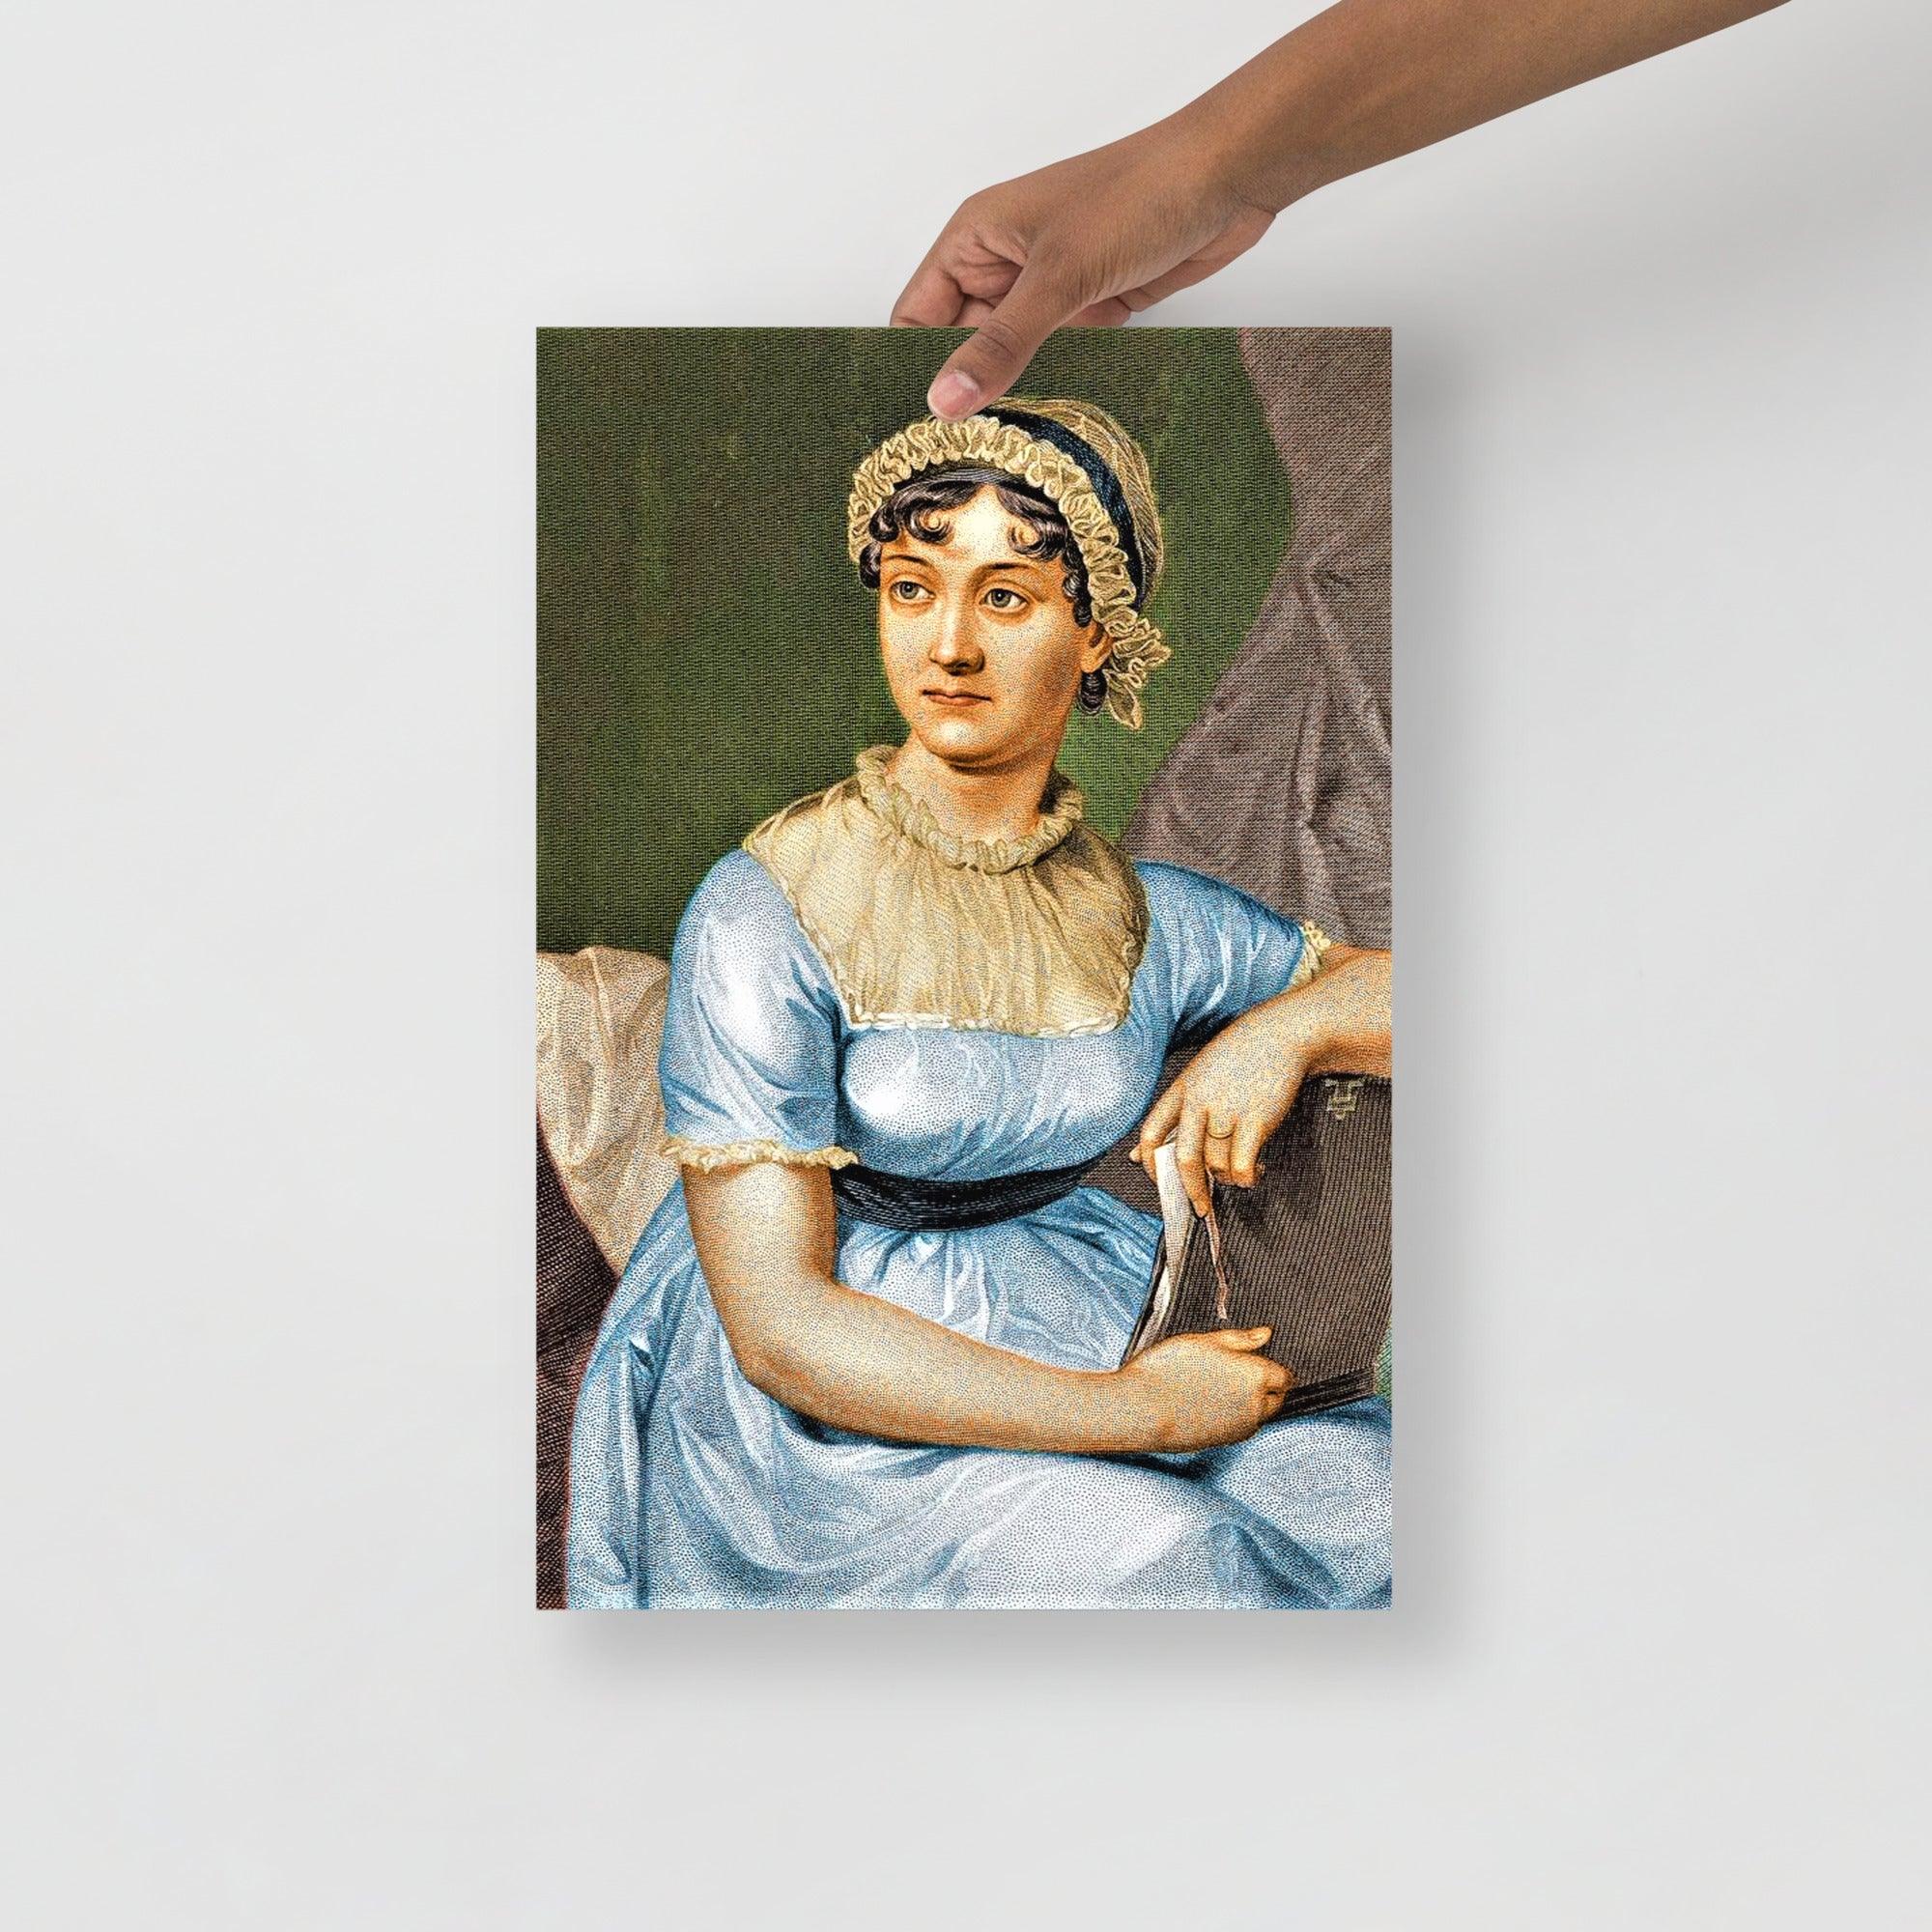 A Jane Austen poster on a plain backdrop in size 12x18”.